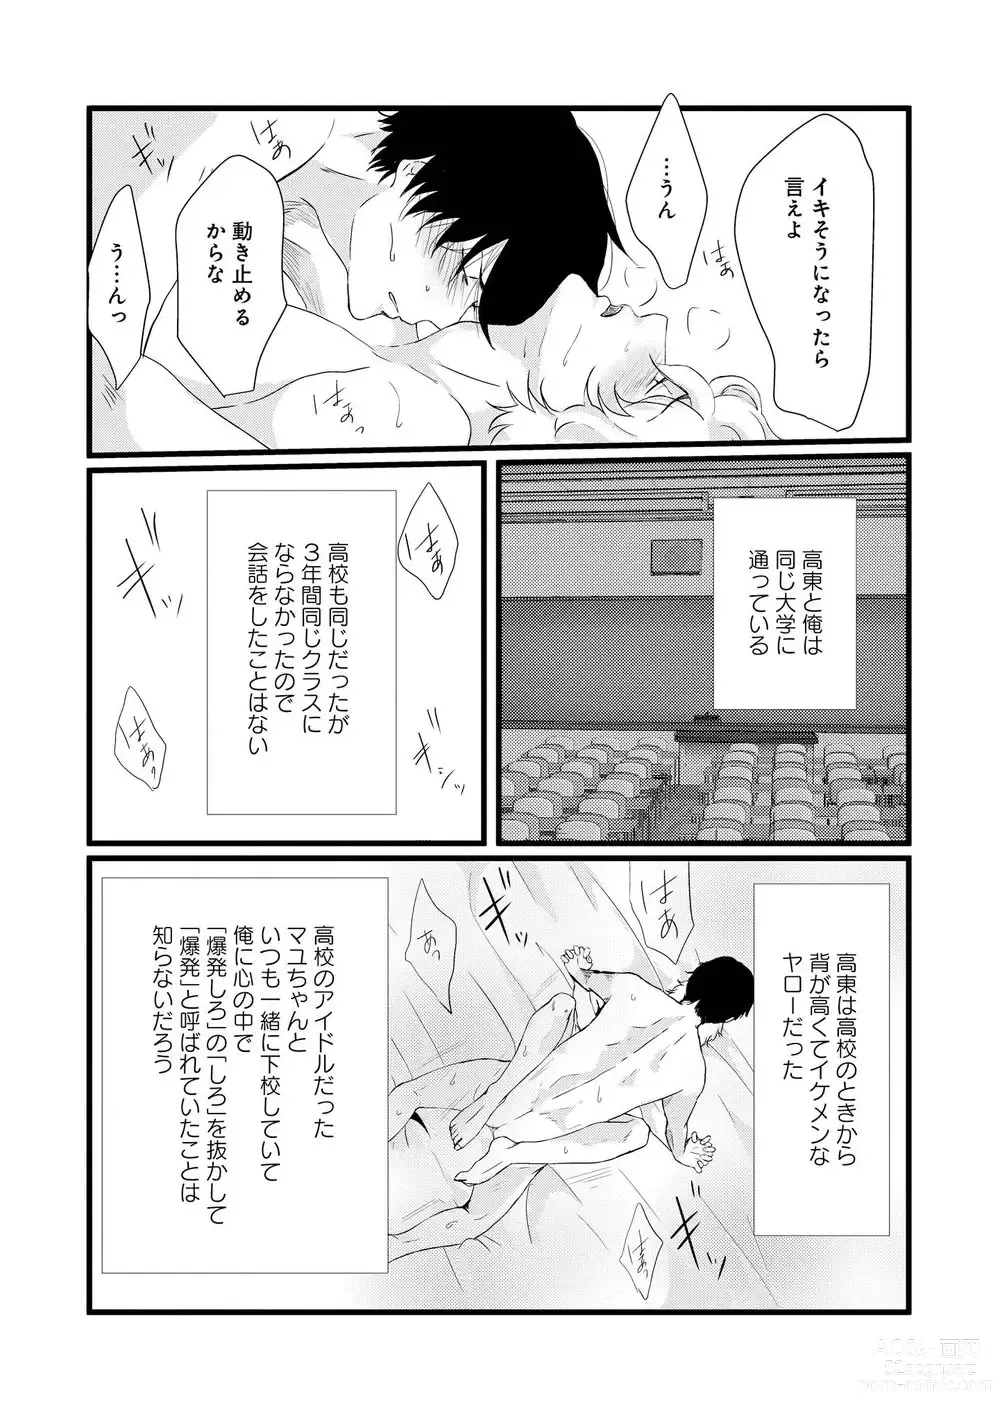 Page 5 of manga AHOERO